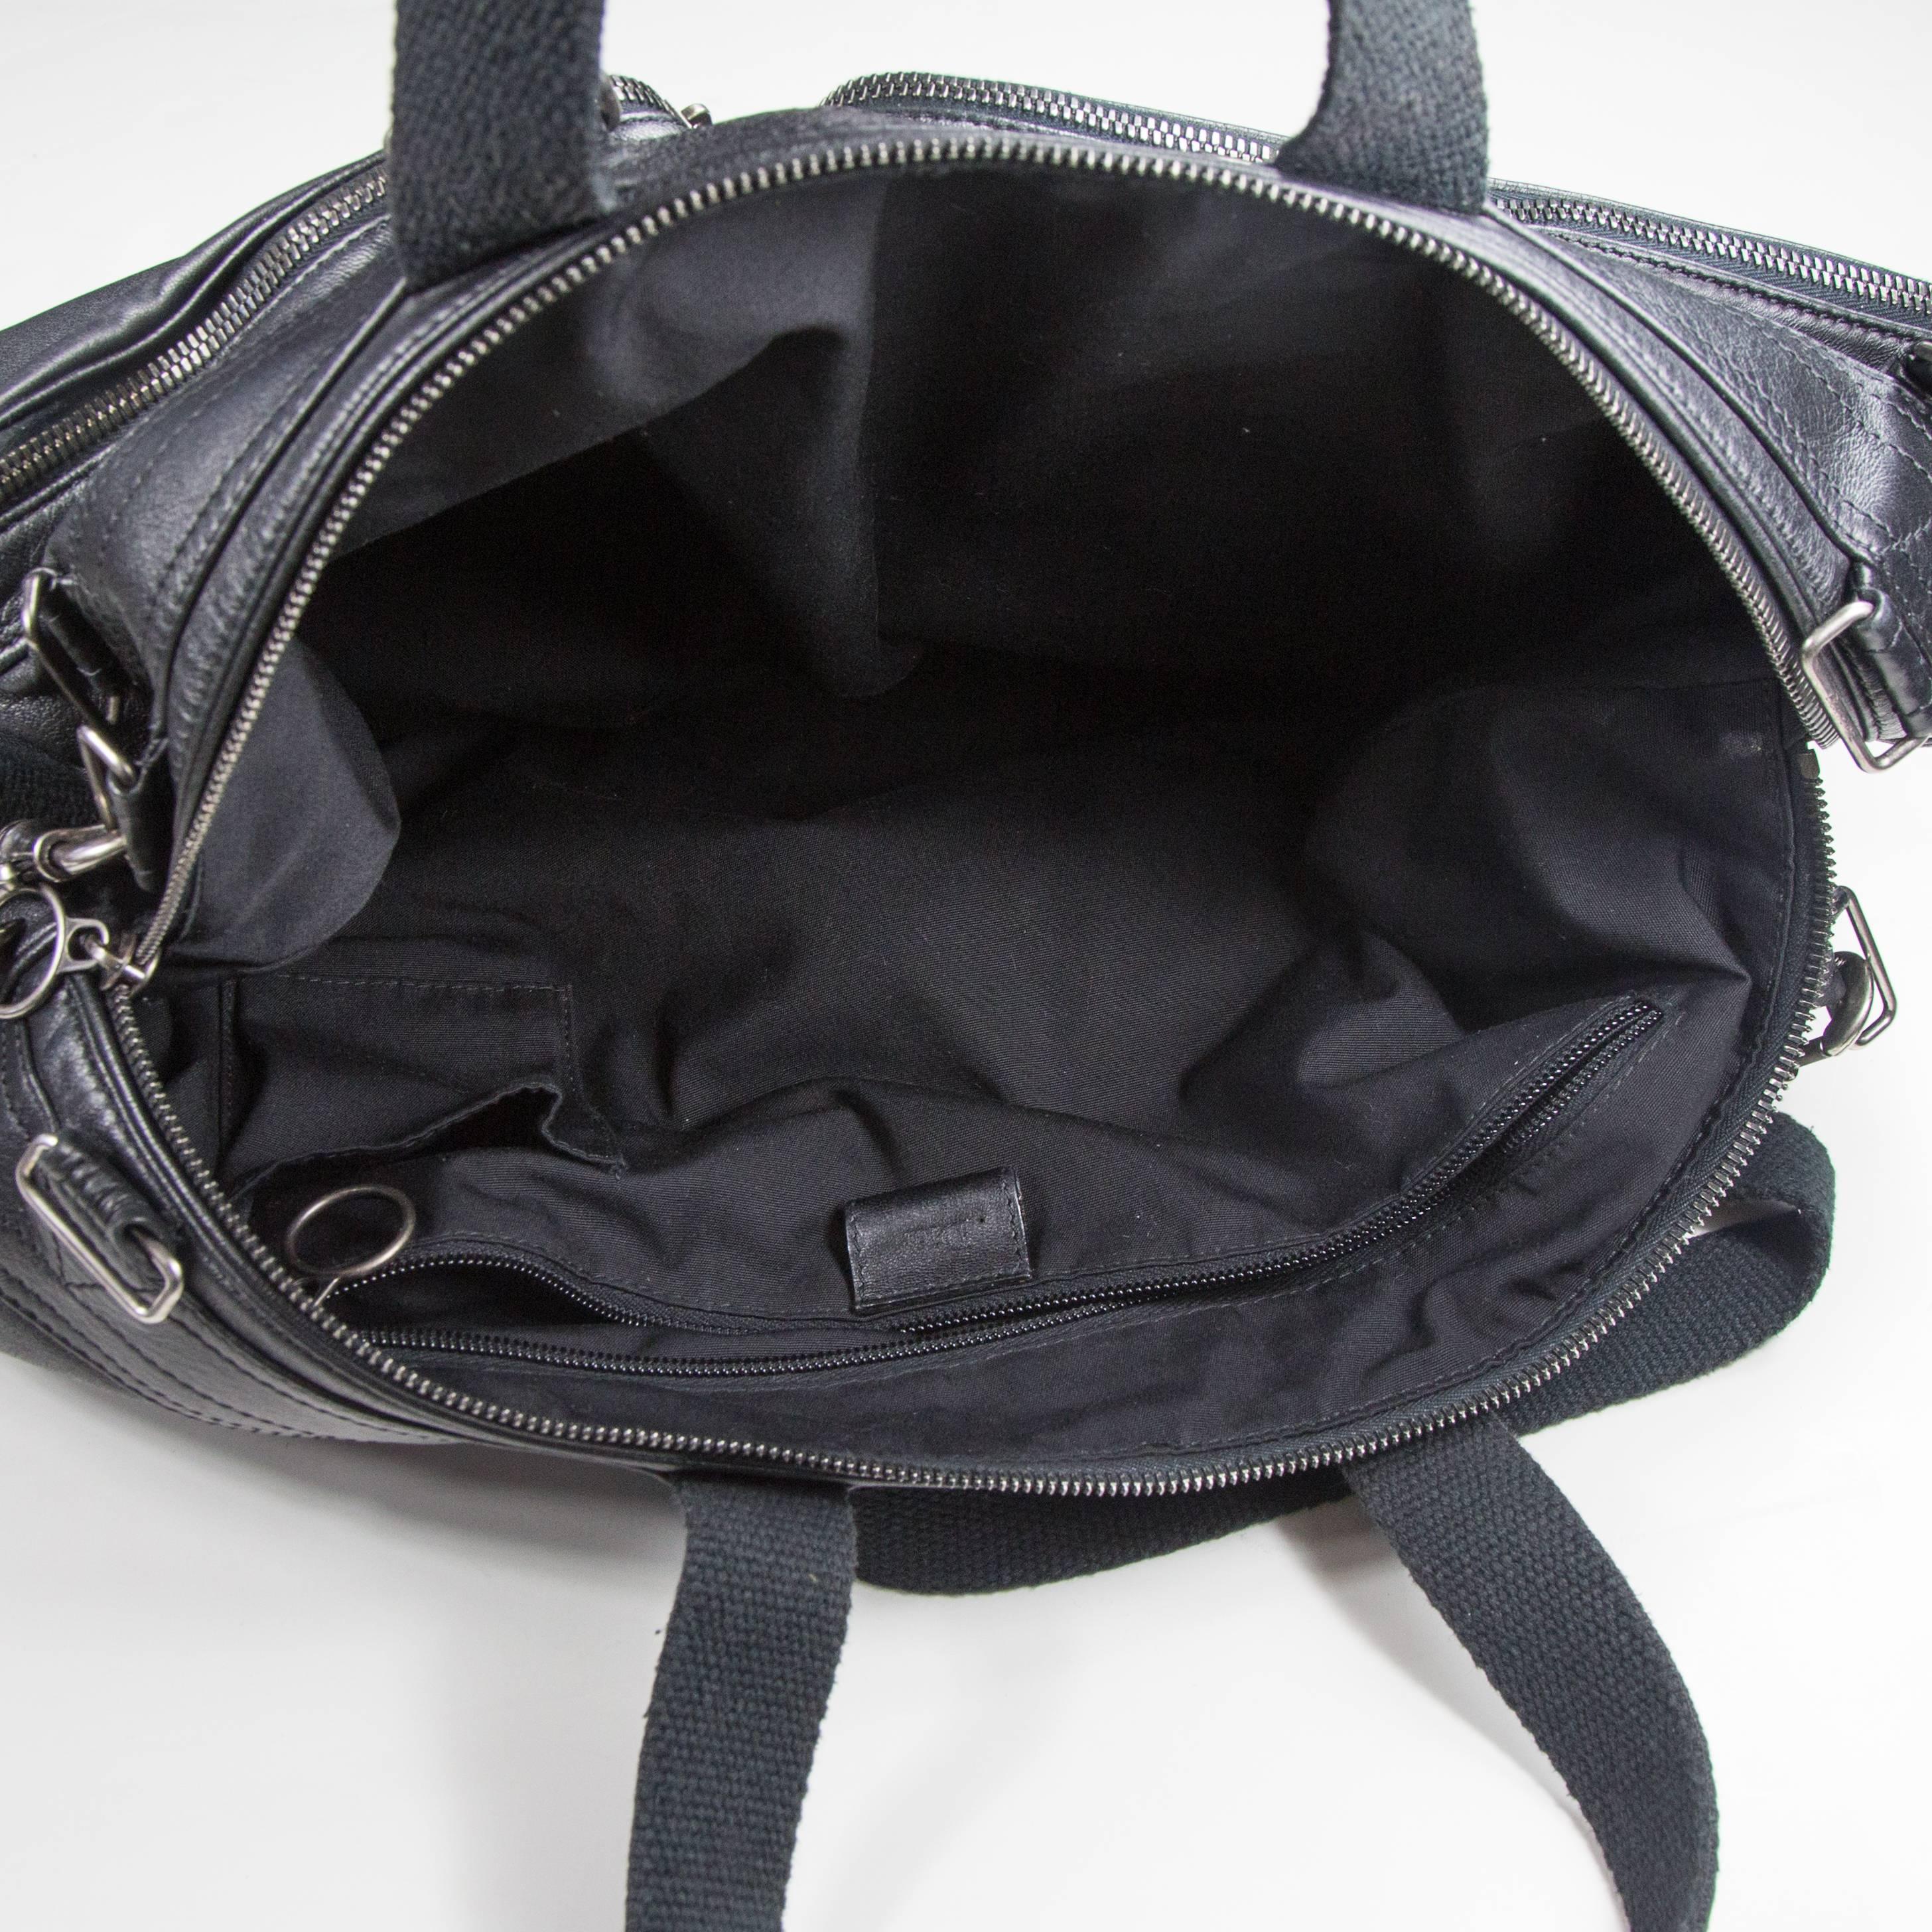 Dior Homme Duffle Leather Bag - Black Tassel Weekend Travel Gym Delville Hedi 2